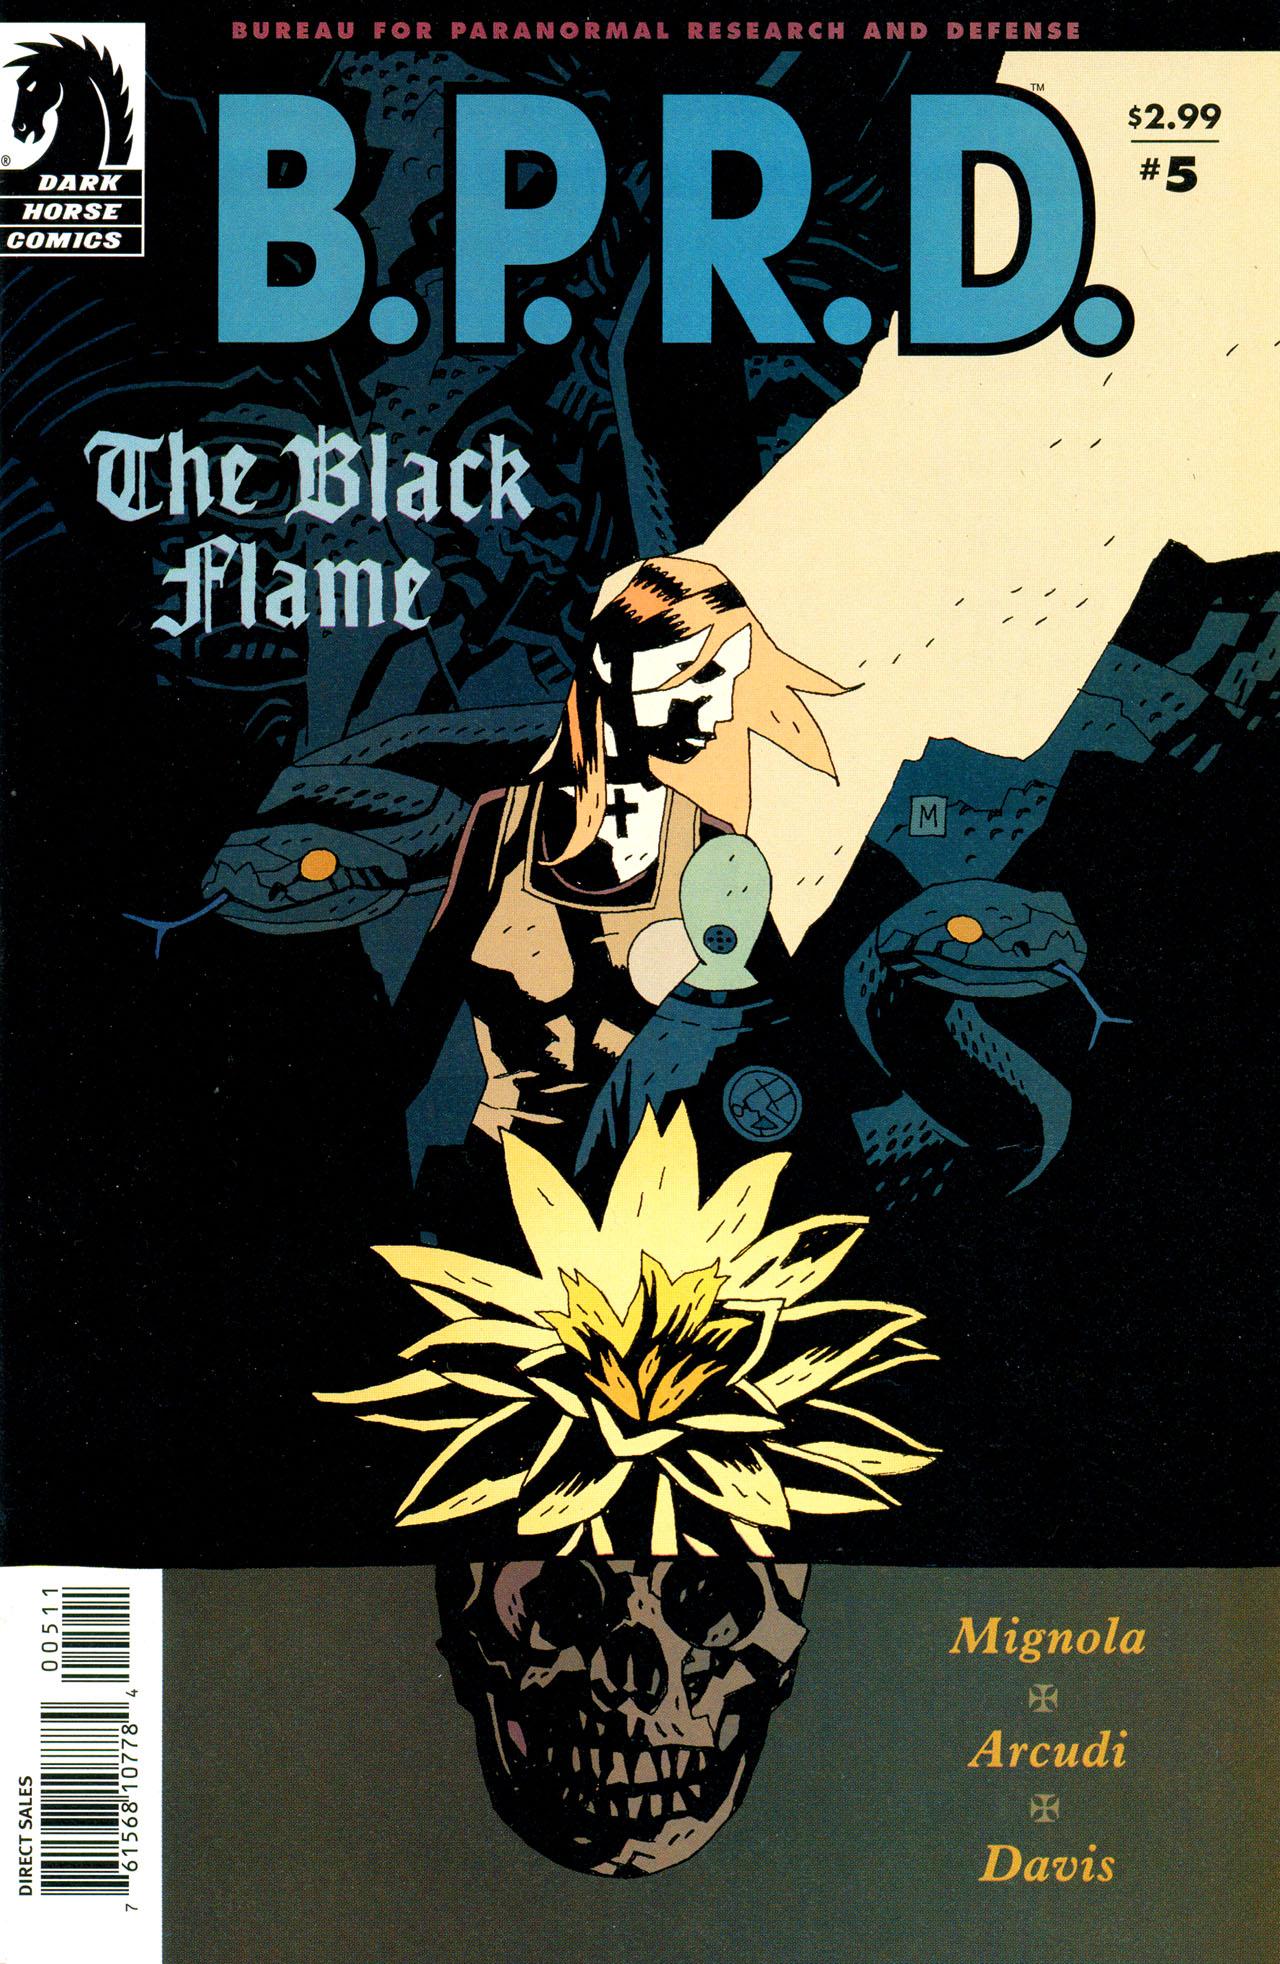 B.P.R.D.: The Black Flame Vol. 1 #5